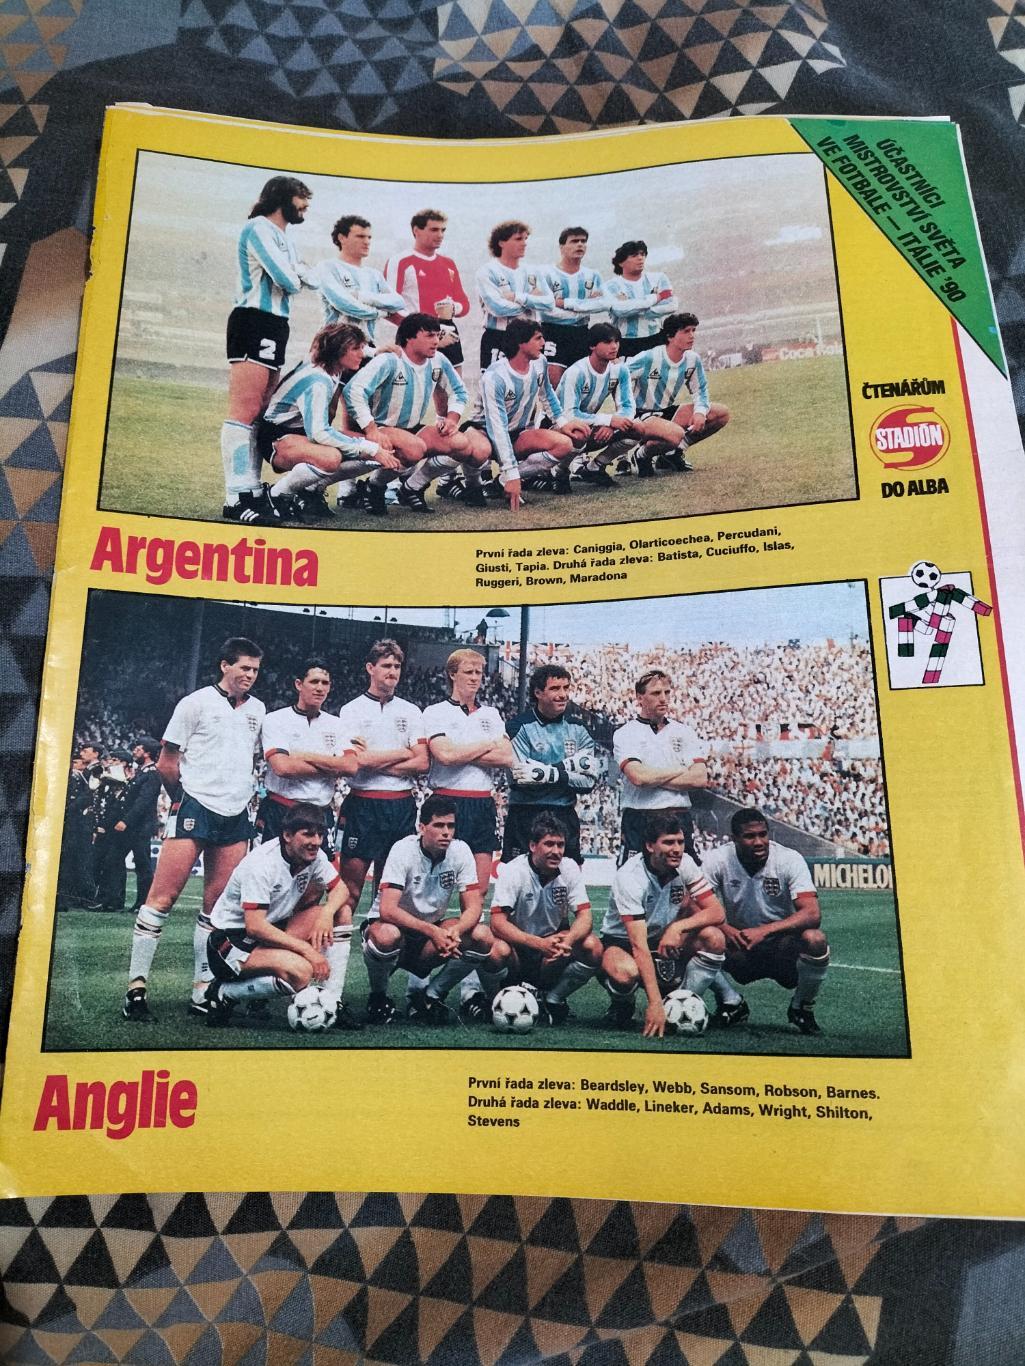 Постер из журнала Стадион сб.Аргентины и Англии.